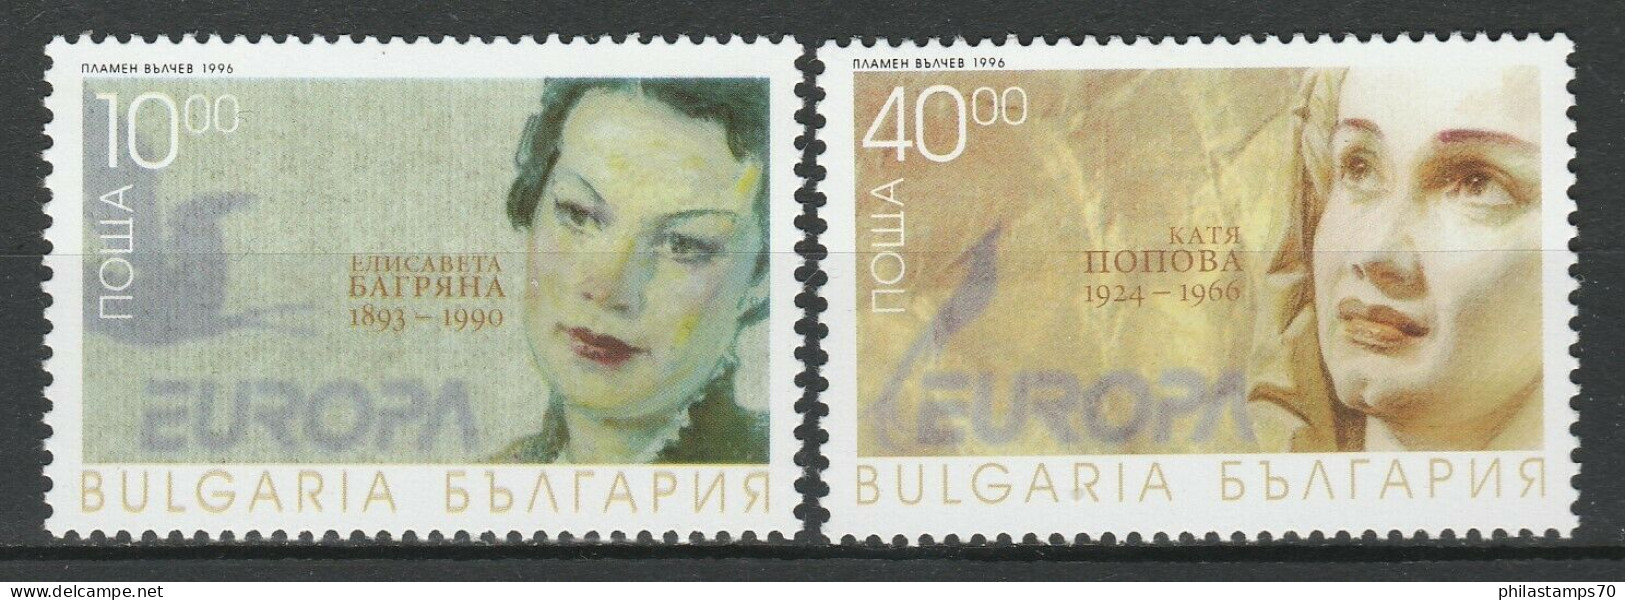 EUROPA CEPT 1996 BULGARIA  SERIE COMPLETA SET COMPLETE MNH** - 1996